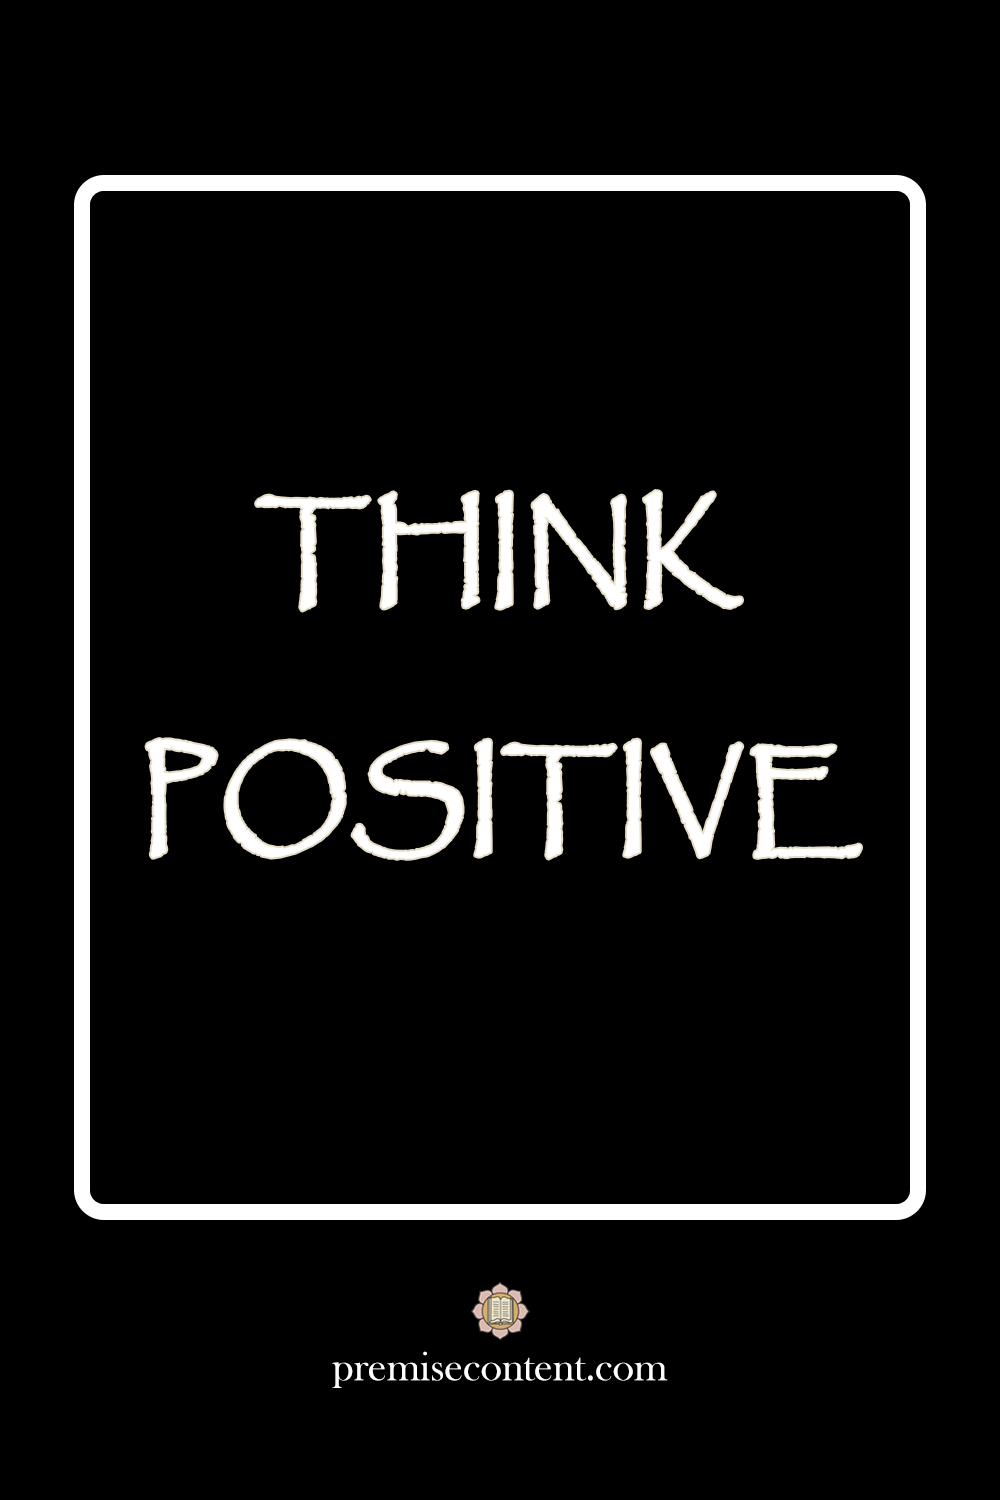 THINK POSITIVE - Positive Affirmation